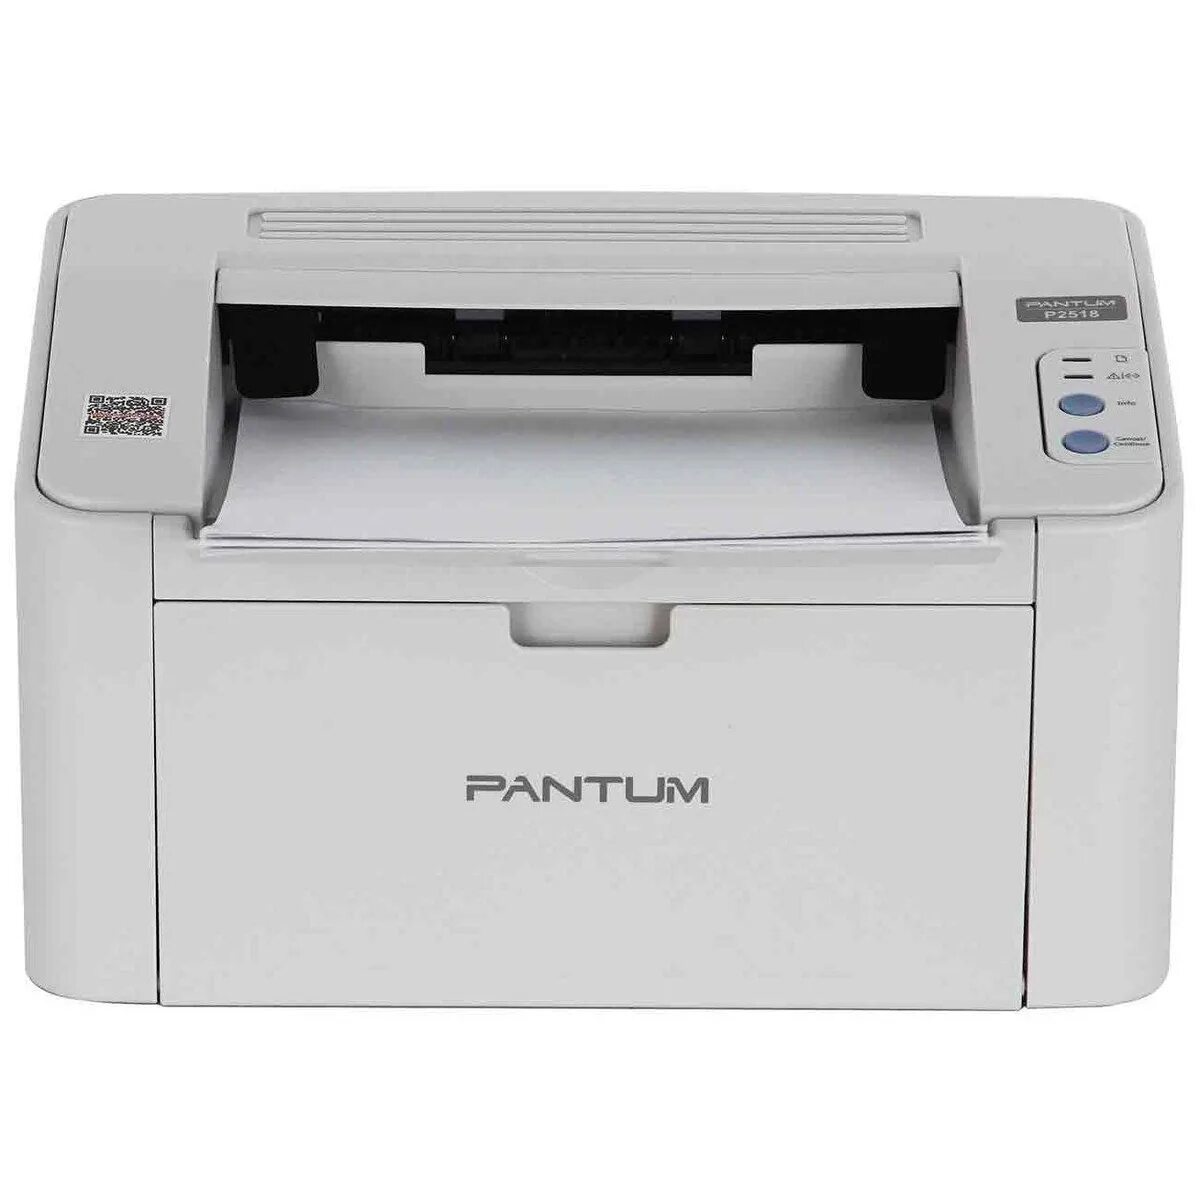 P2200 series драйвер. Принтер лазерный Pantum p2200. Принтер лазерный Pantum p2500nw. Принтер лазерный Pantum p2518. Принтер лазерный Pantum p2200 a4.